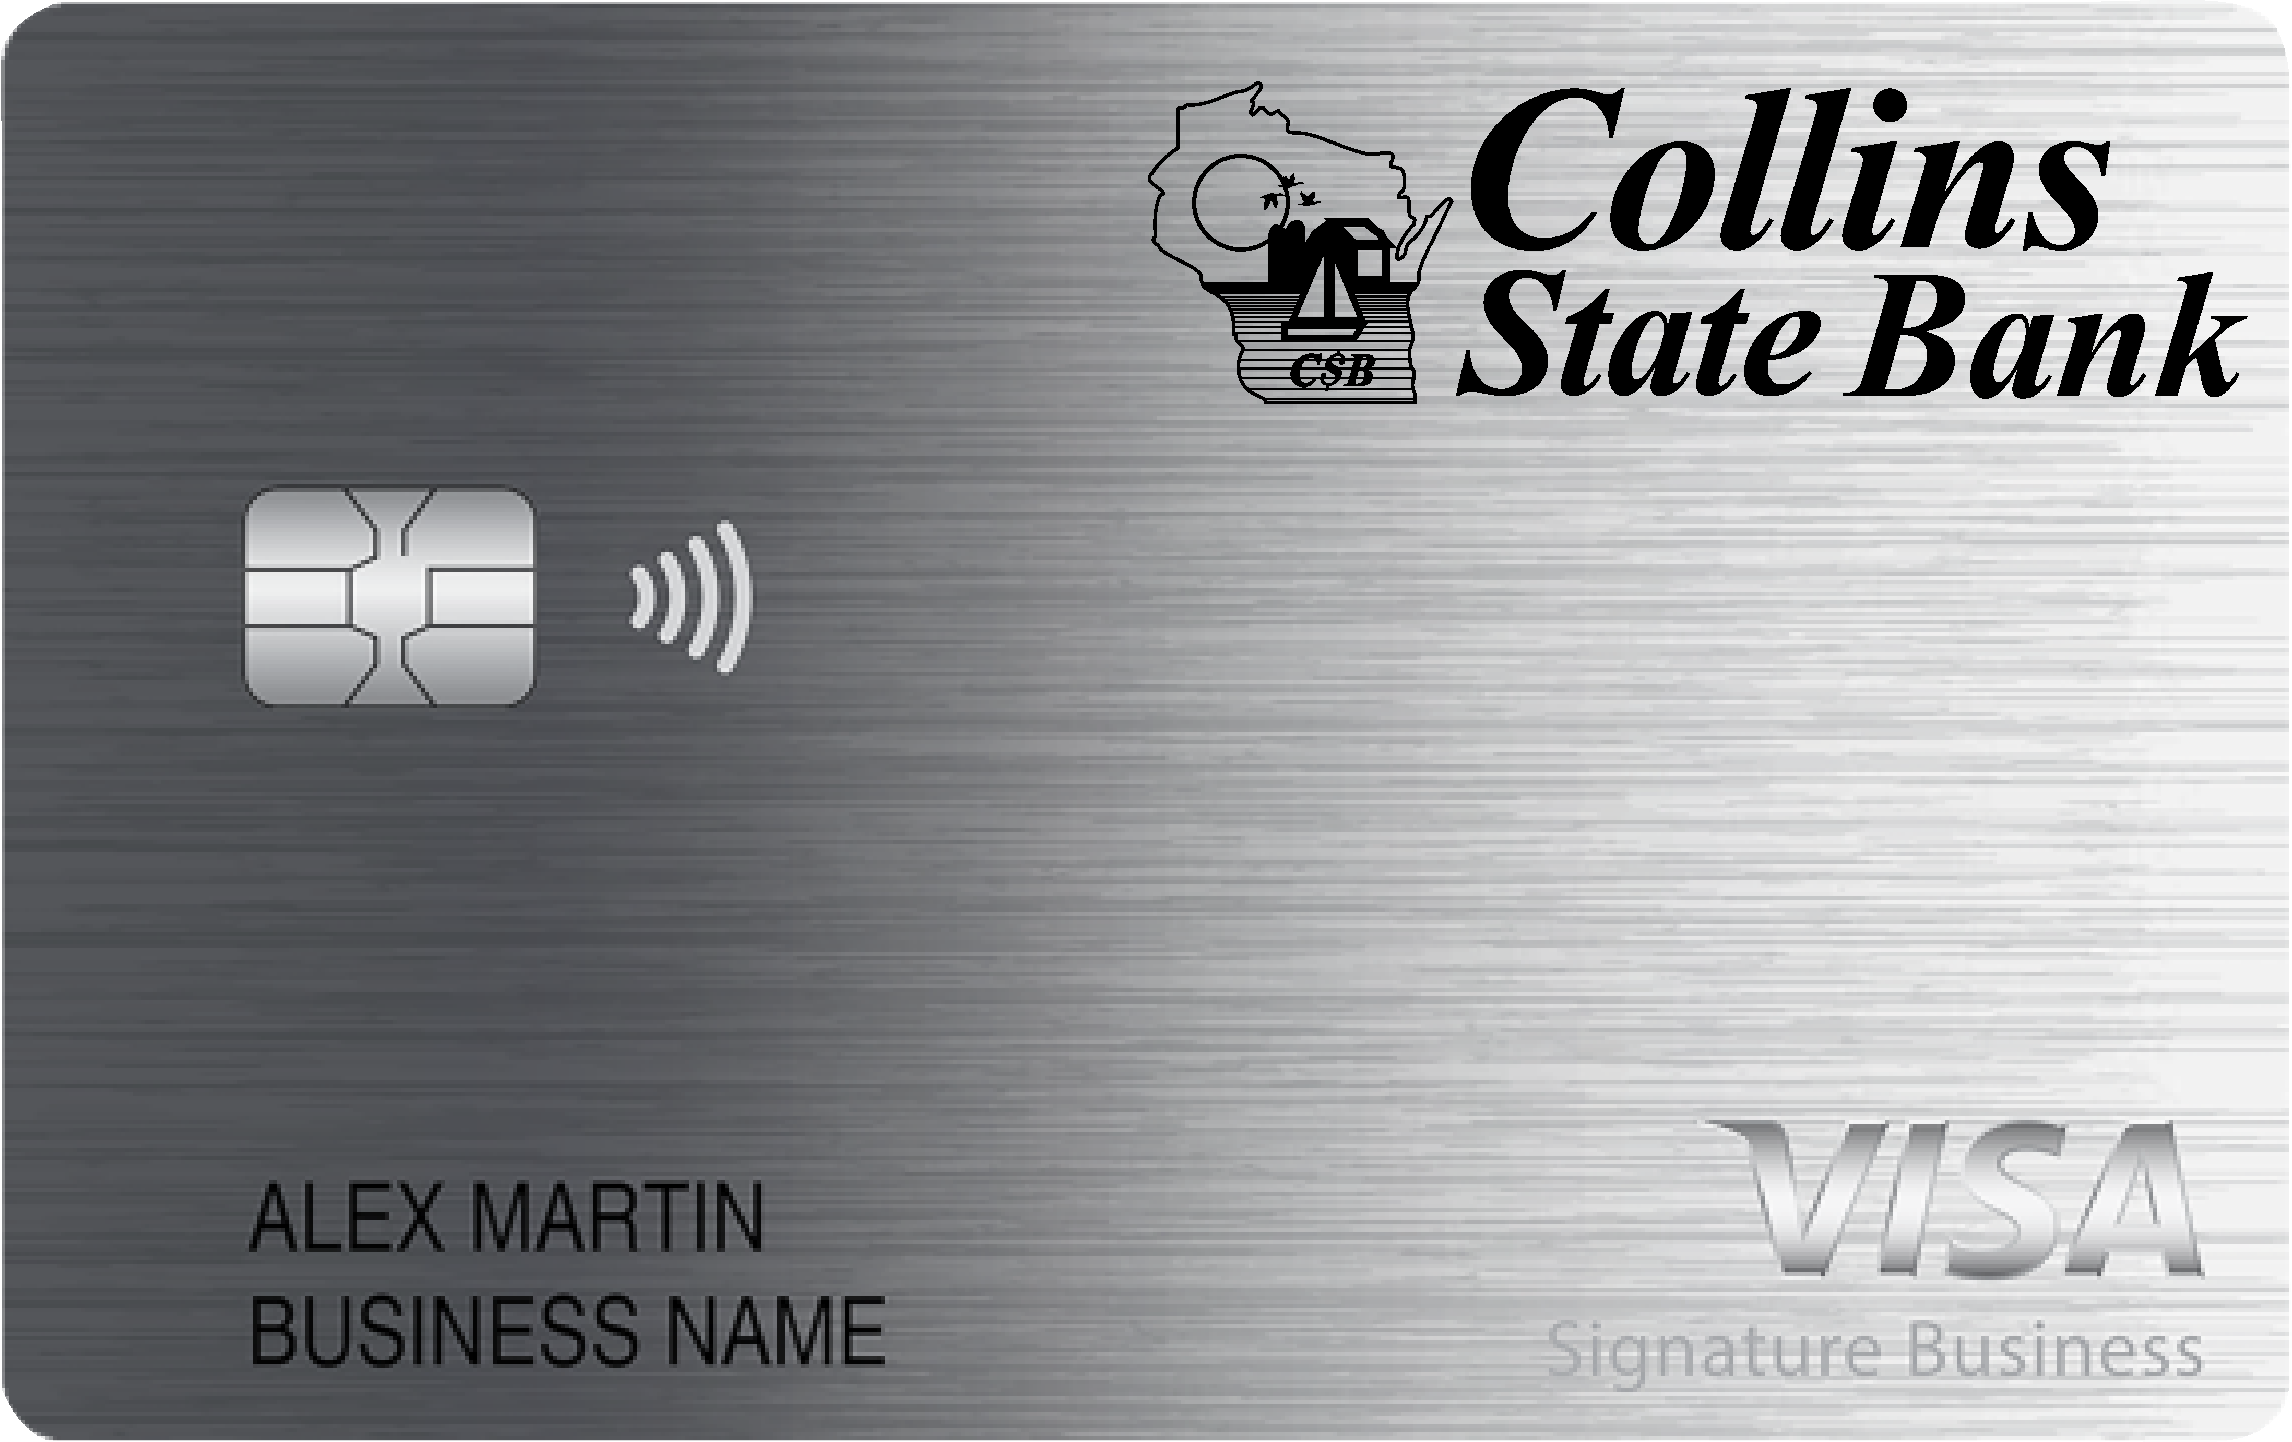 Collins State Bank Smart Business Rewards Card